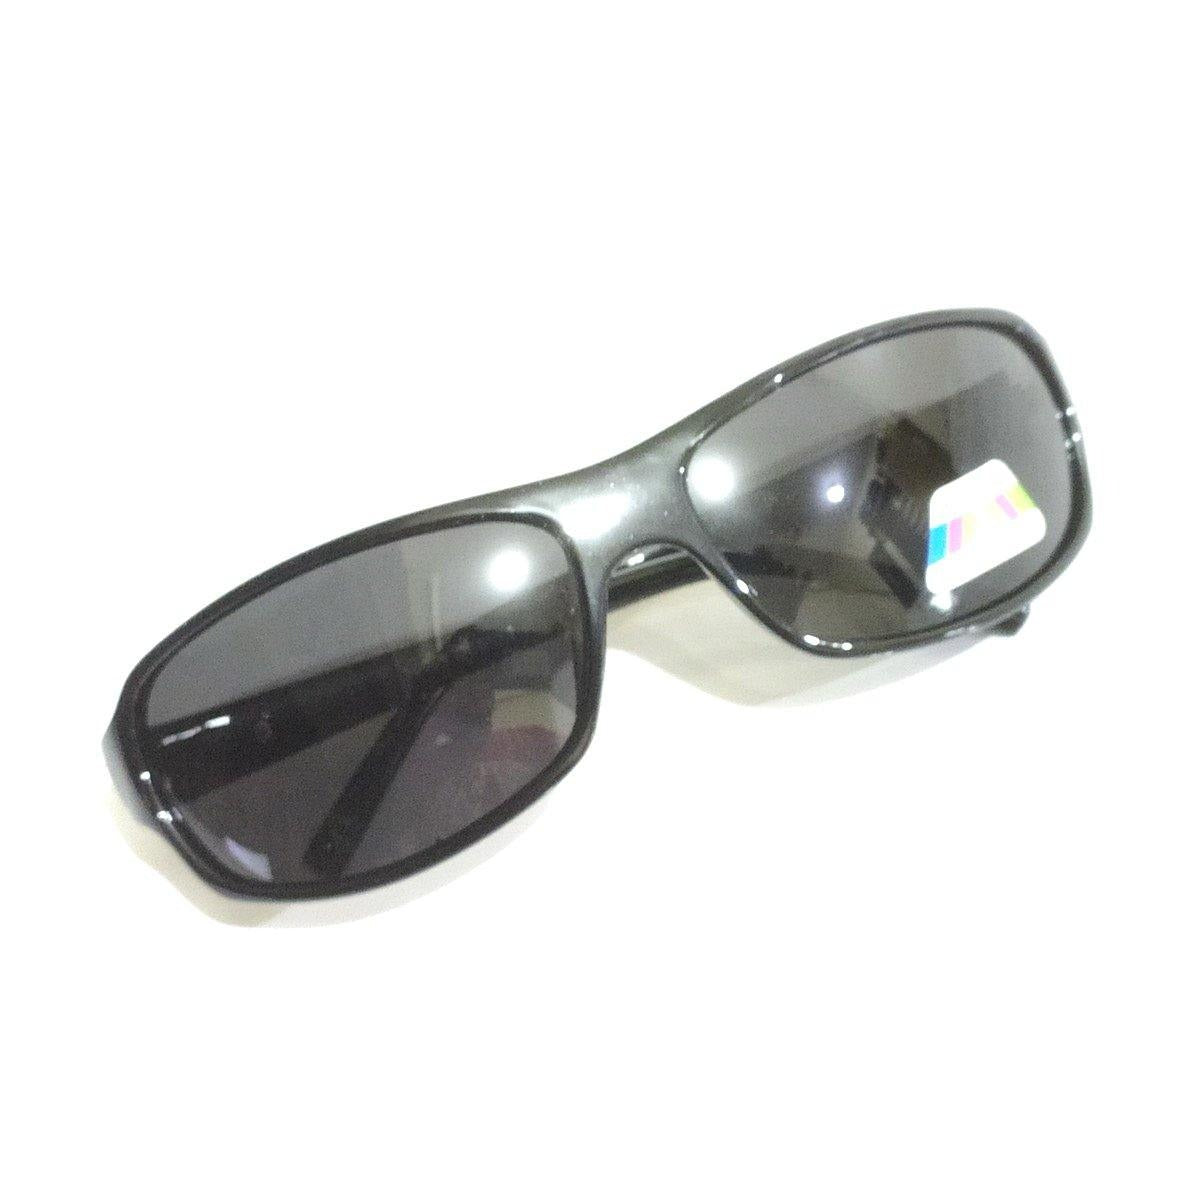 Wraparound Sports Polarized Sunglasses for Men and Women 10068SBK - Glasses India Online